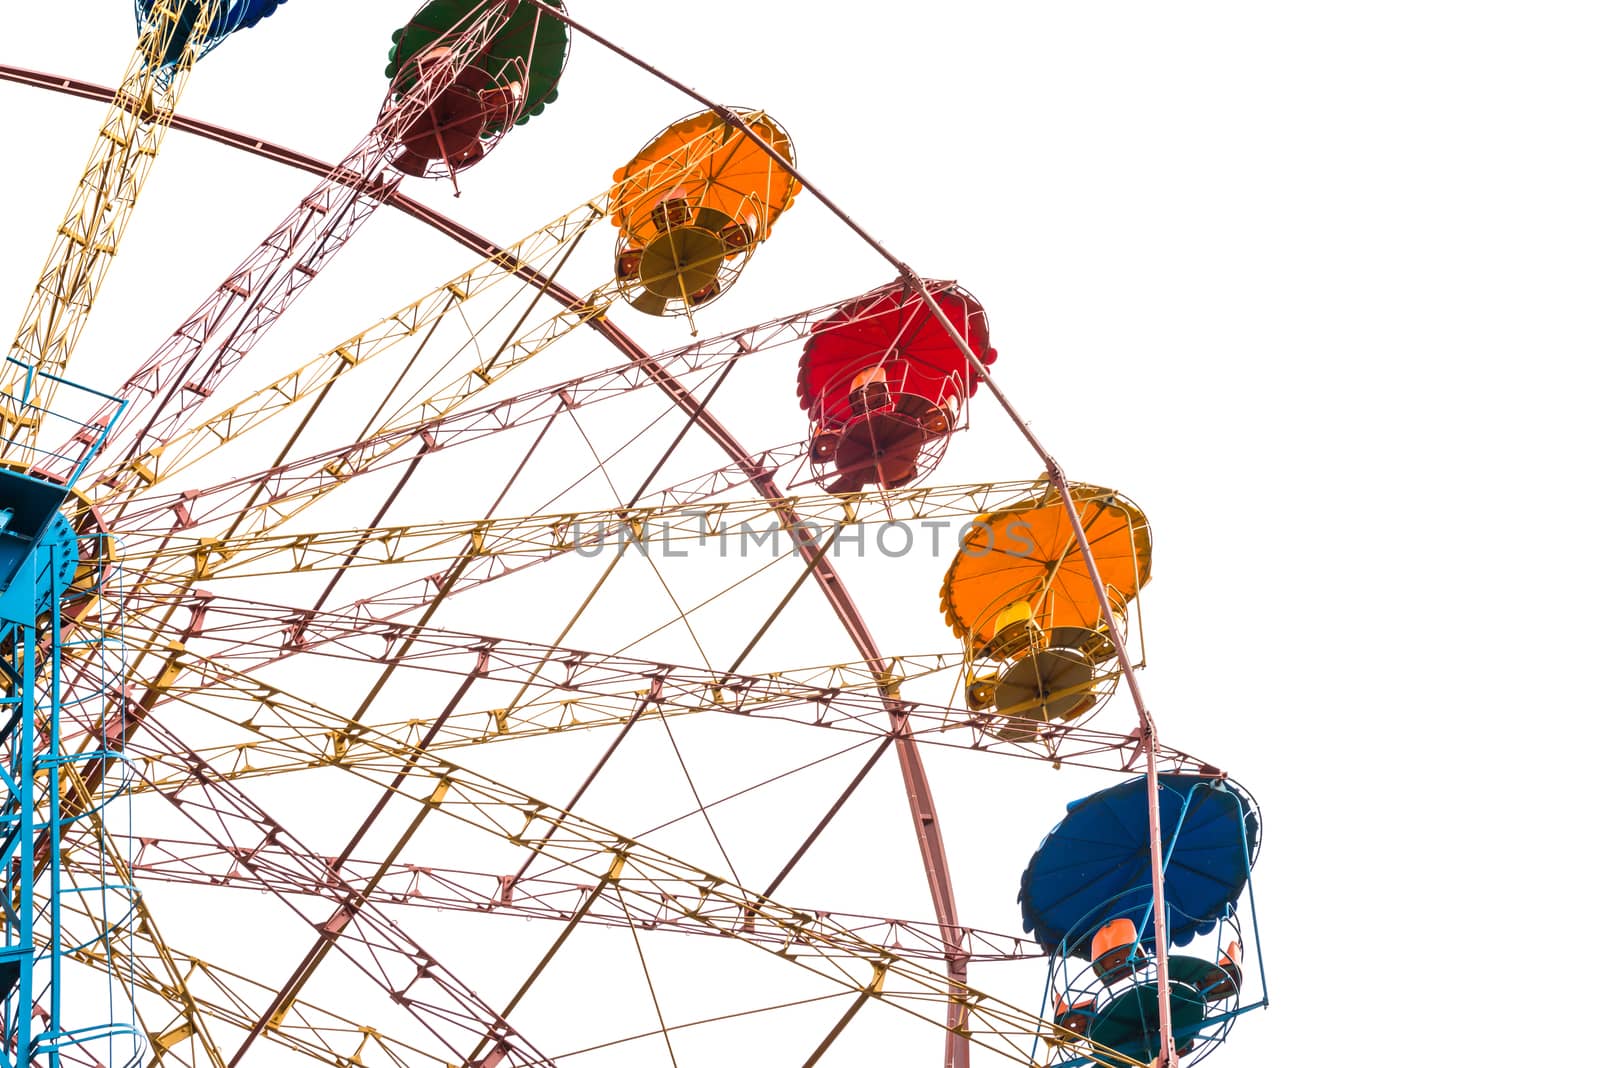 Ferris wheel isolated on white by vapi